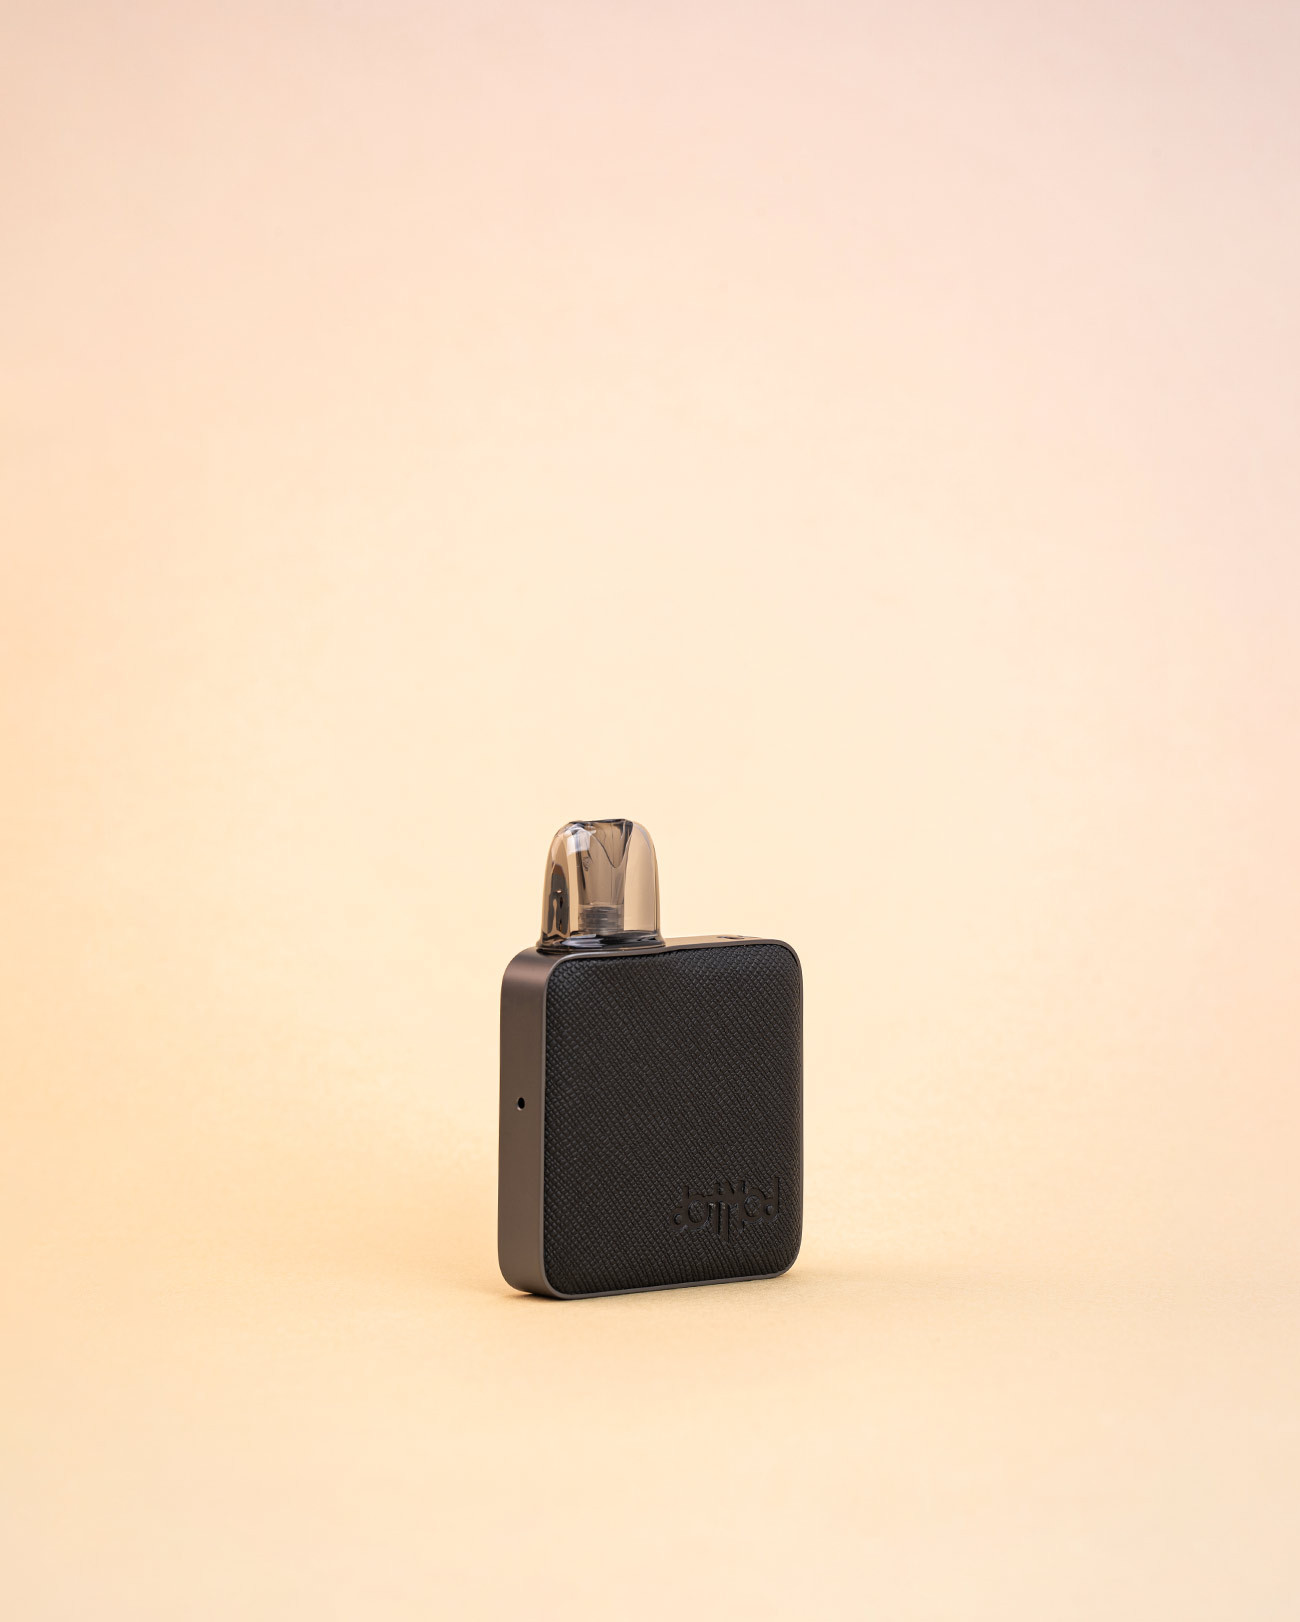 Kit cigarette électronique pod DotPod Nano DotMod couleur black